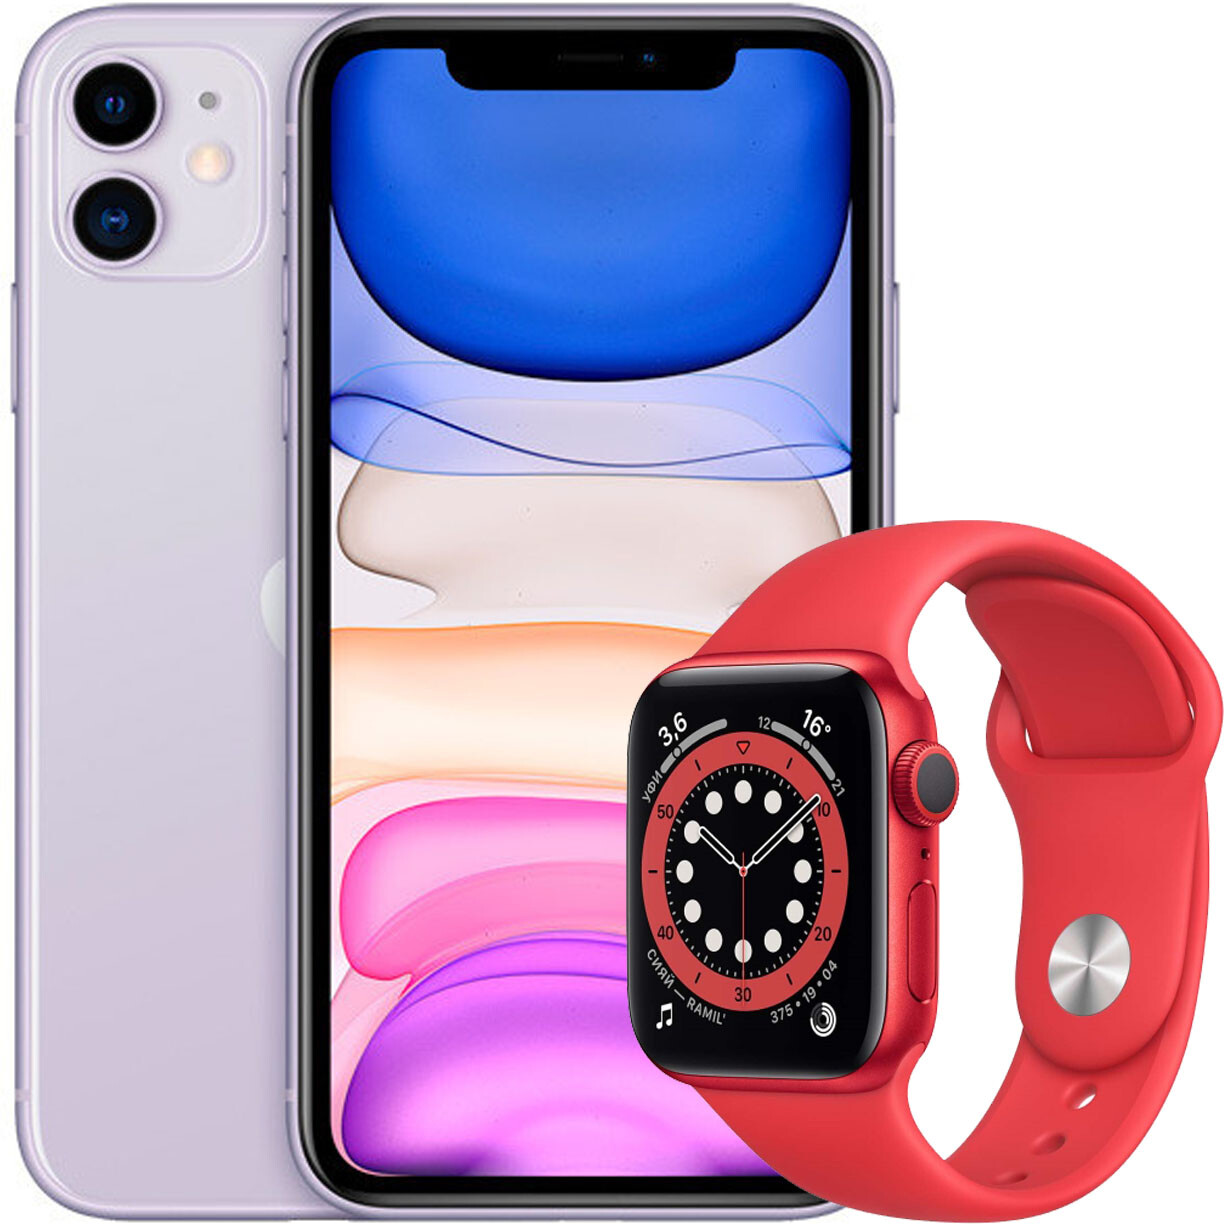 Kupit Smartfon Apple Iphone 11 128gb Purple Apple Watch Series 6 40mm M00a3 Product Red V Rassrochku Ot 3 634 Mes V Moskve Houm Kredit Bank